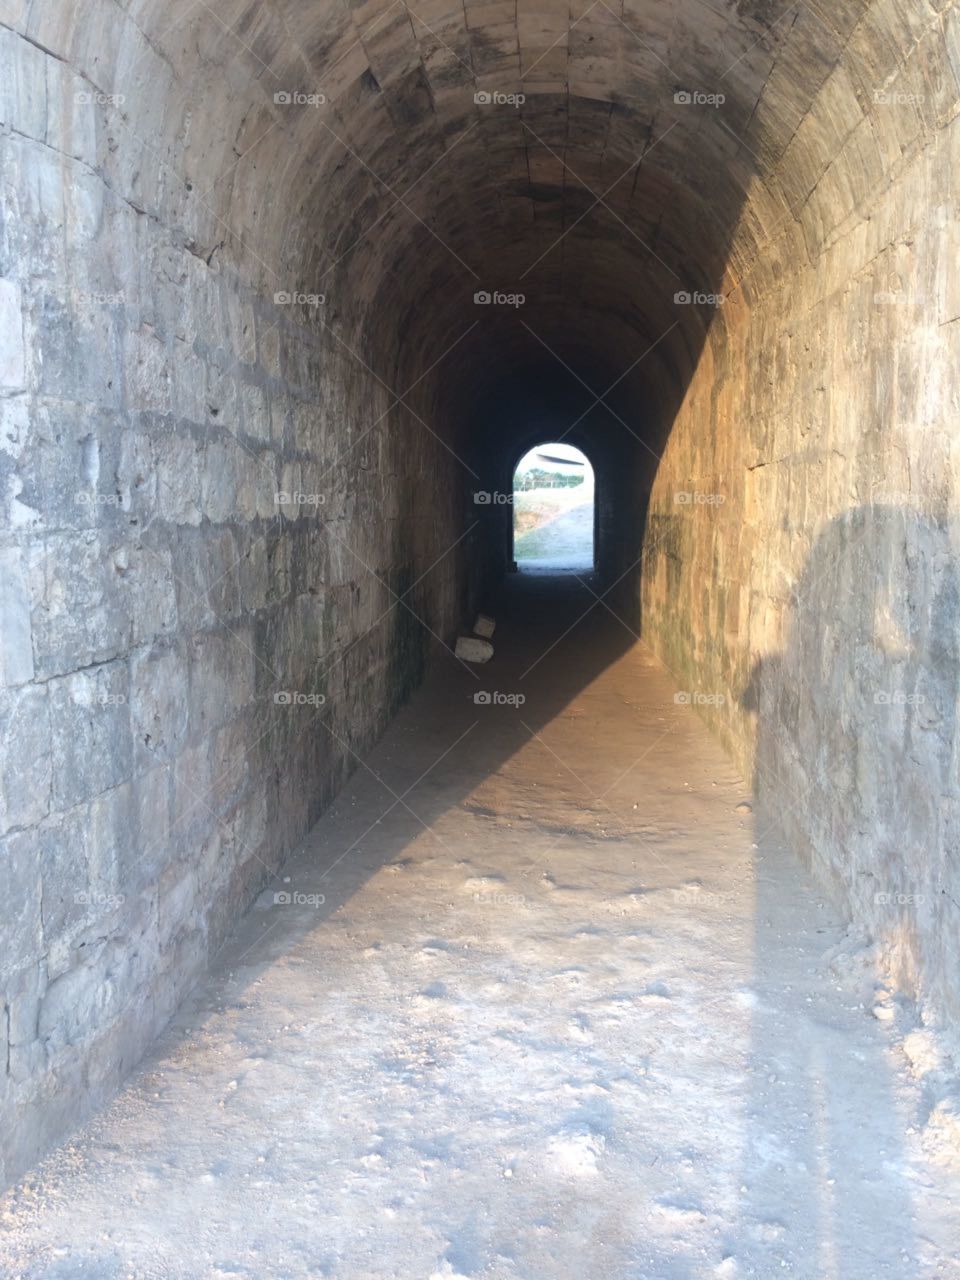 Stone tunnel